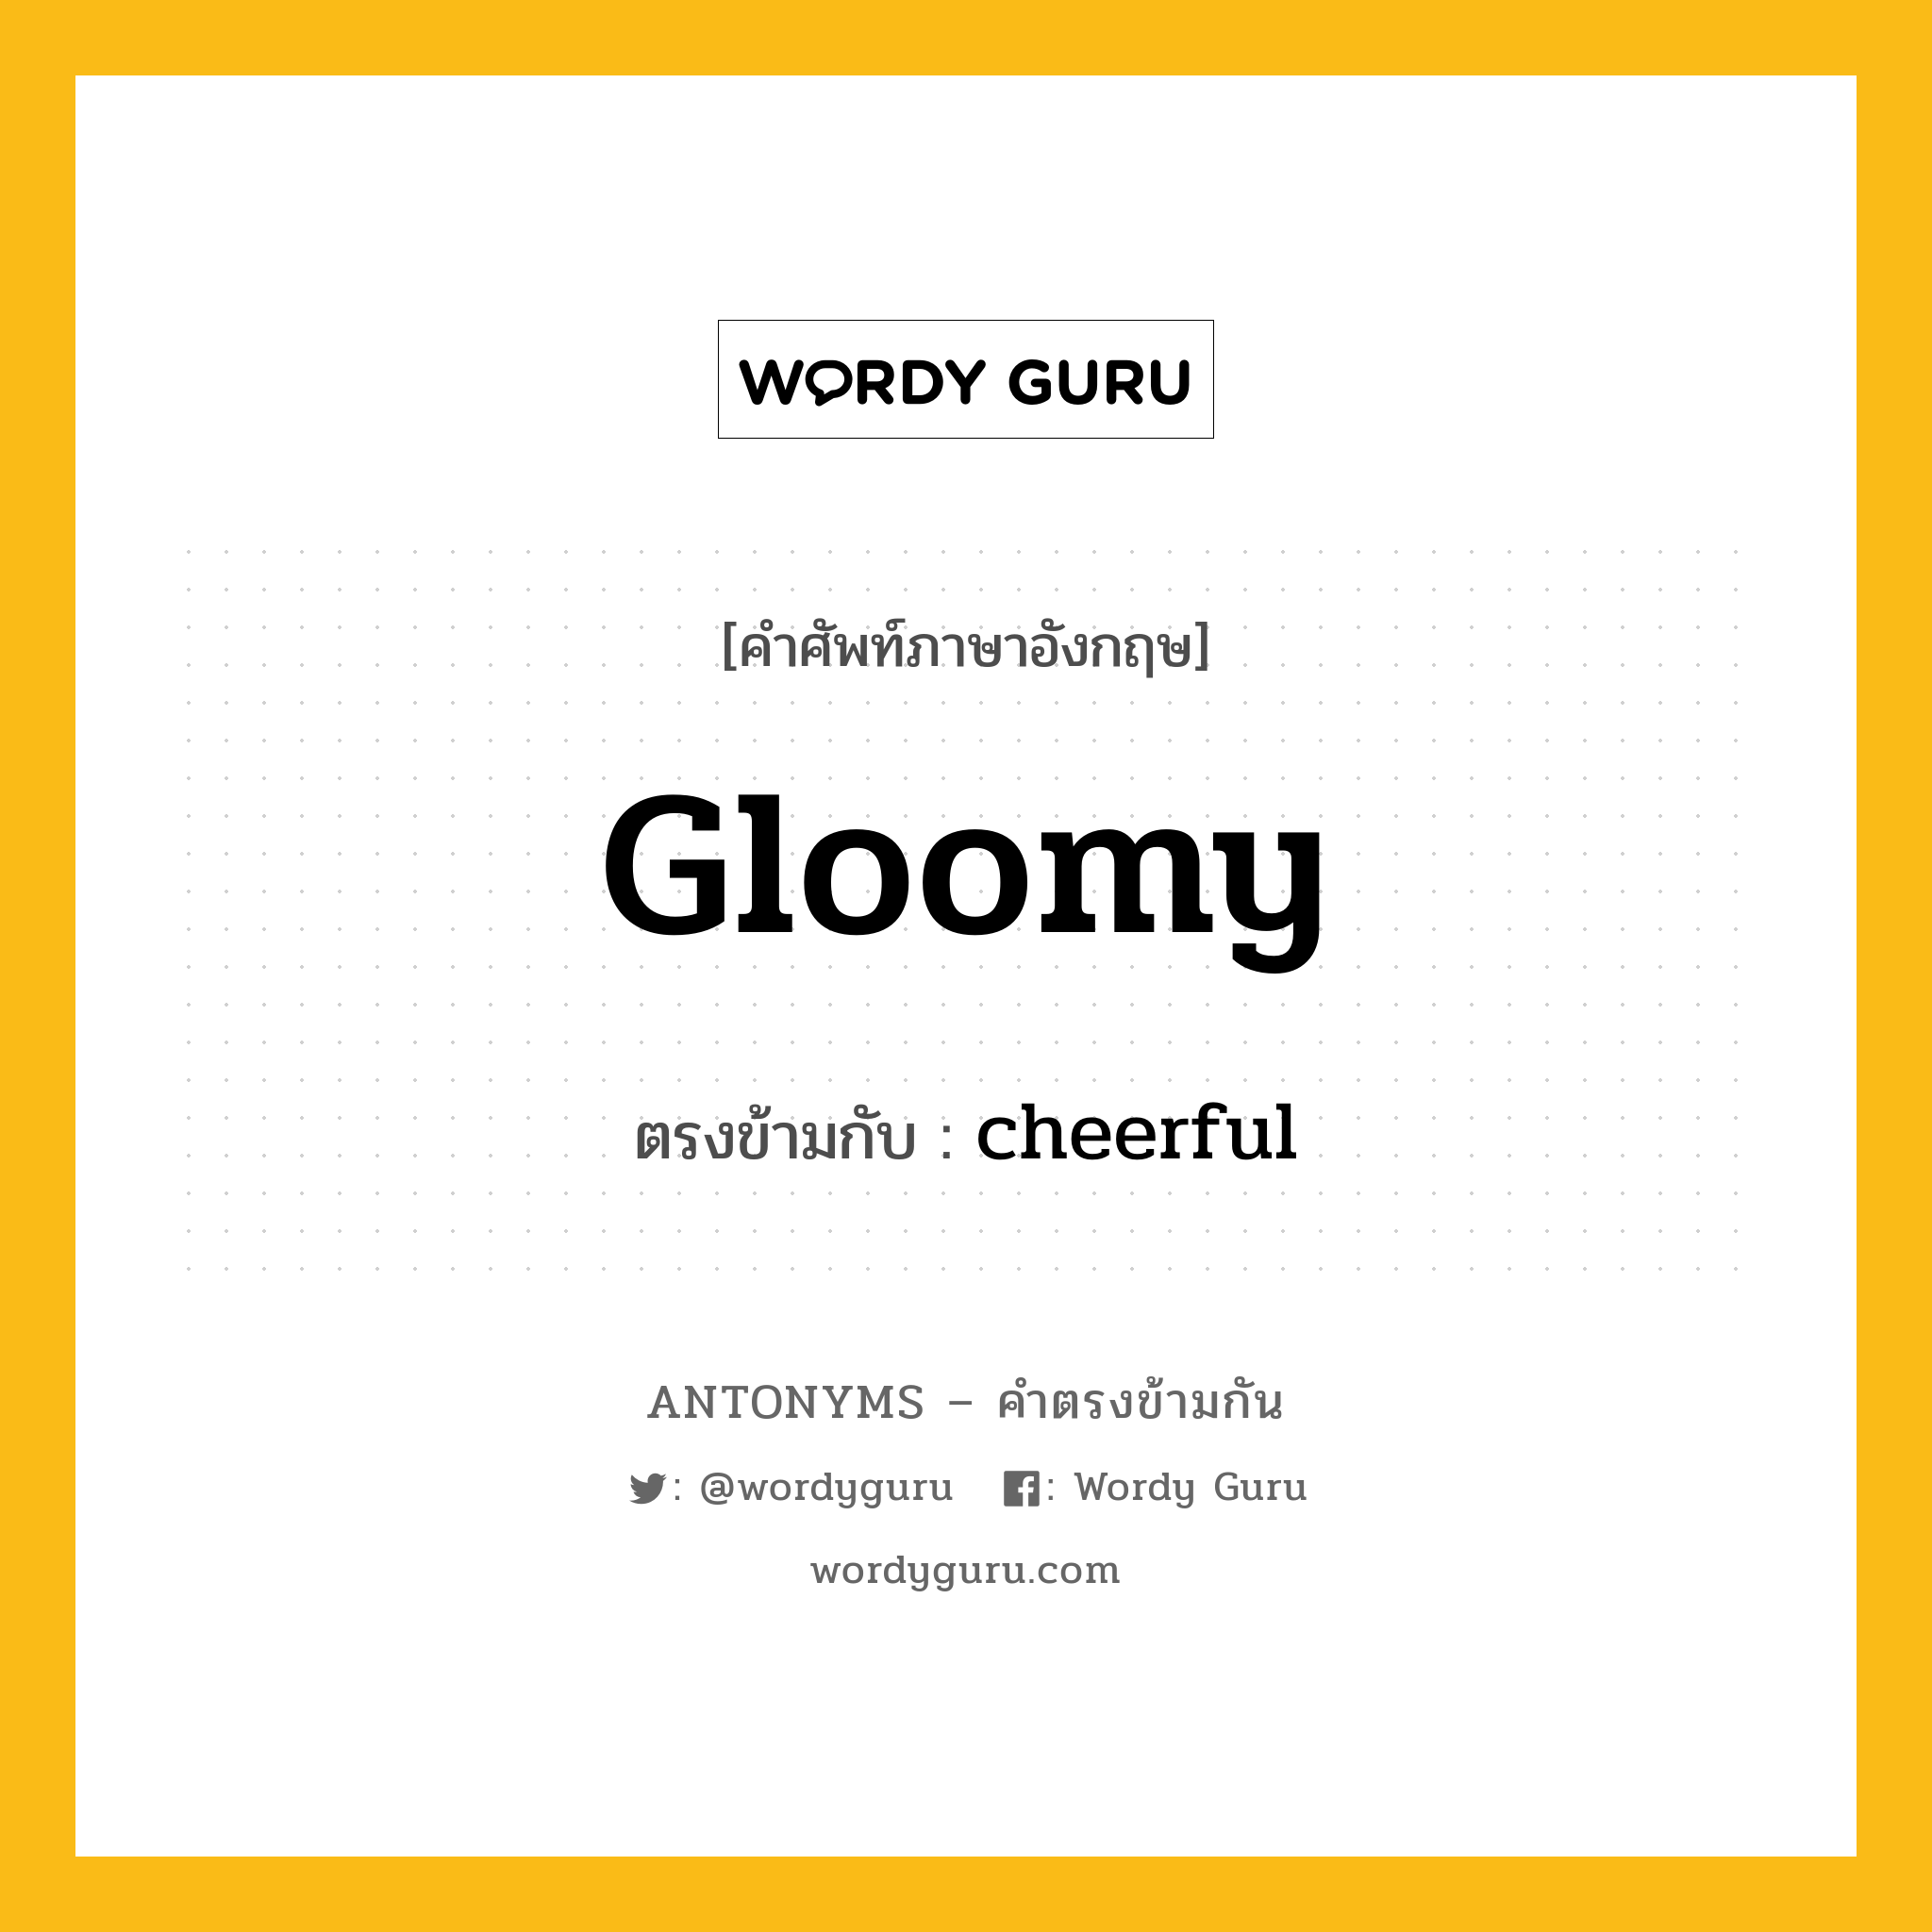 gloomy เป็นคำตรงข้ามกับคำไหนบ้าง?, คำศัพท์ภาษาอังกฤษ gloomy ตรงข้ามกับ cheerful หมวด cheerful